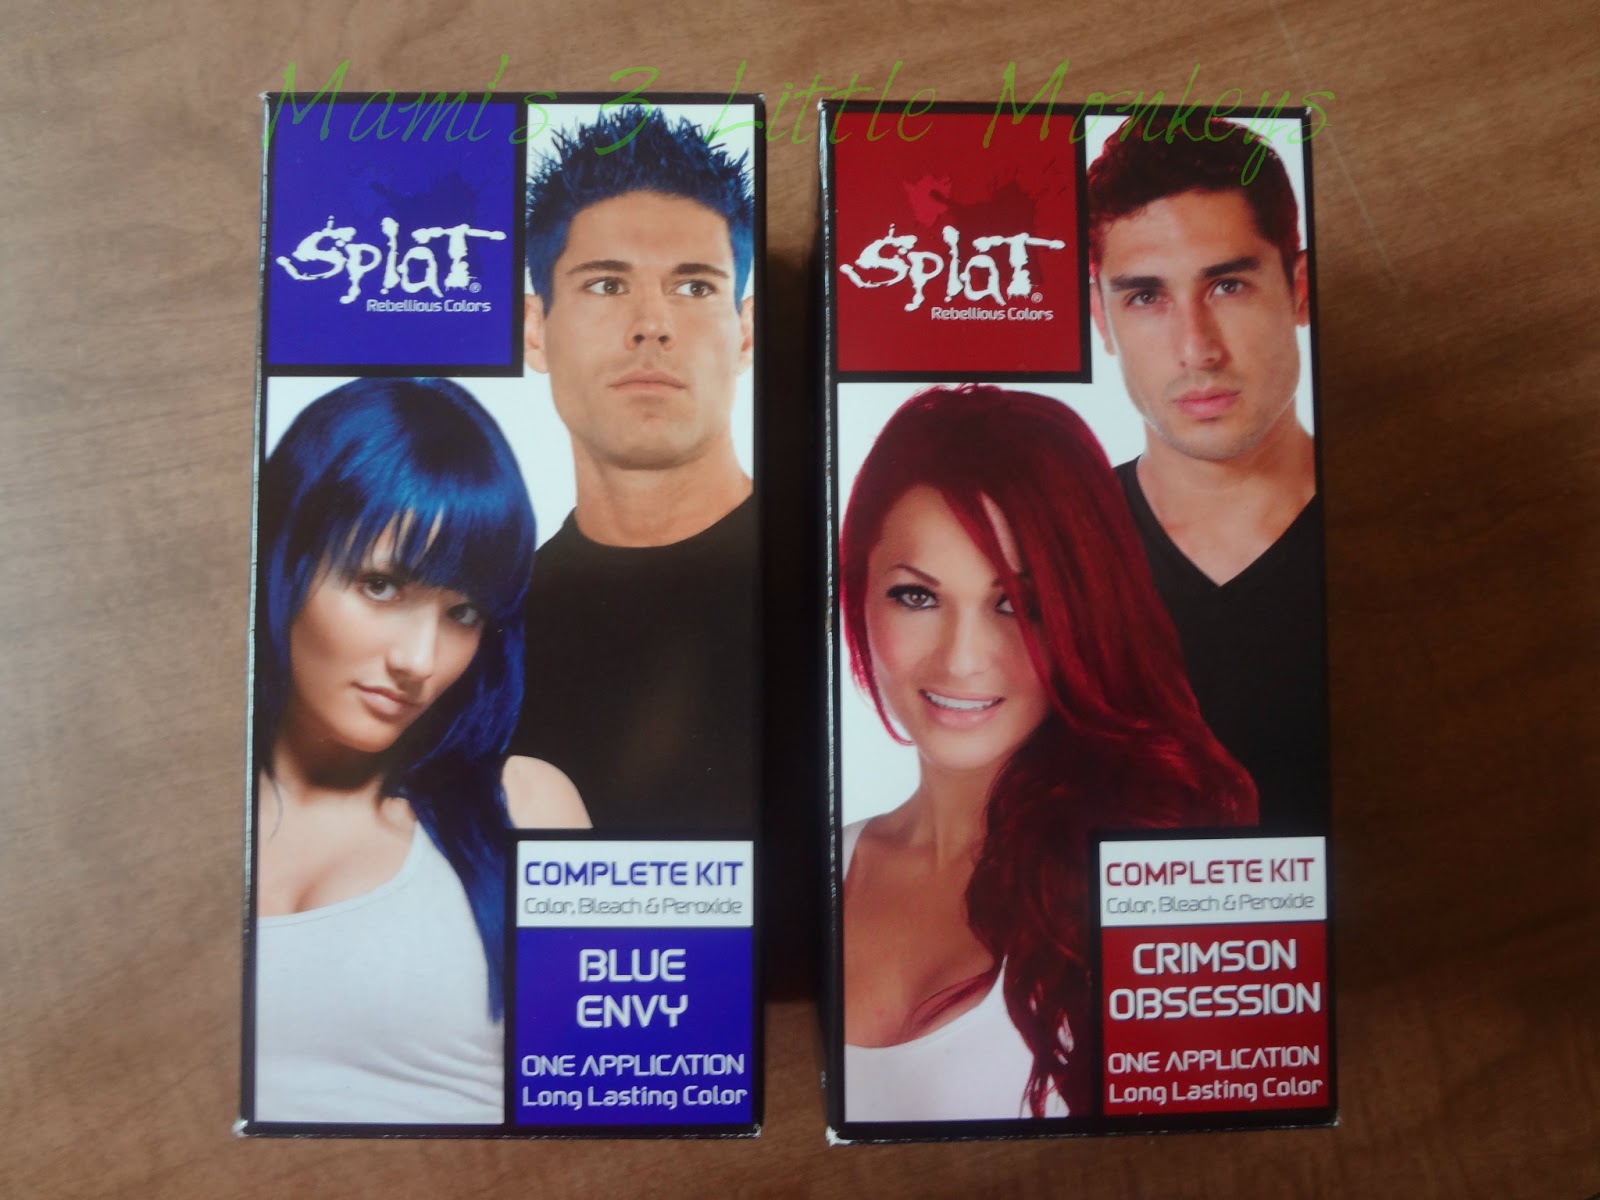 8. "Splat Rebellious Colors Semi-Permanent Hair Dye in Blue Envy" - wide 6